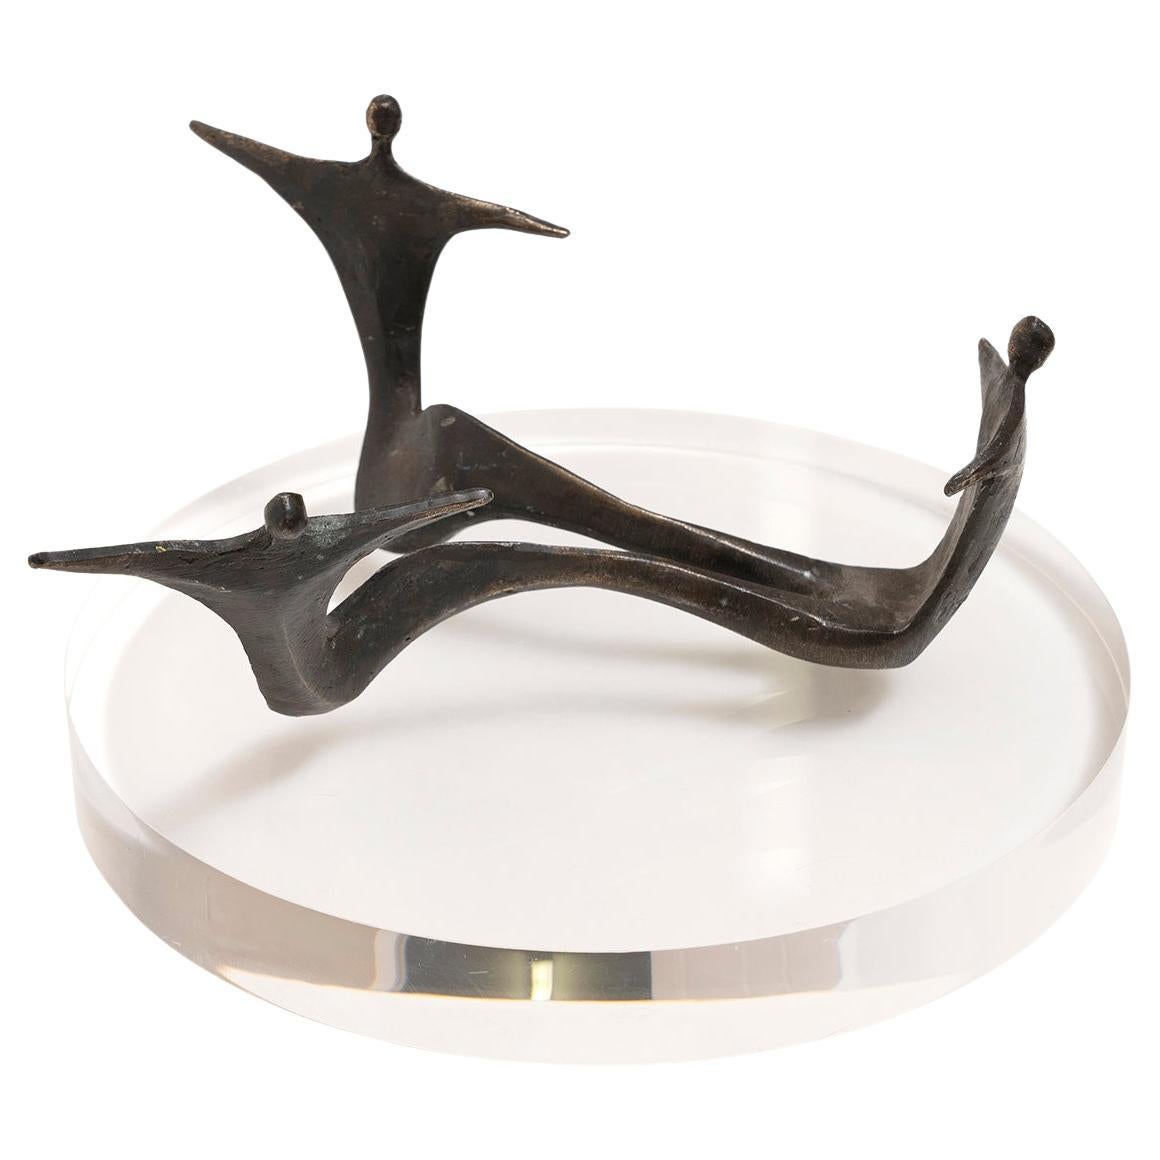 Sculpture Bronze Figurative 3 Dancers Biomorphic Abstract diameter 22cm 8 3/4" For Sale